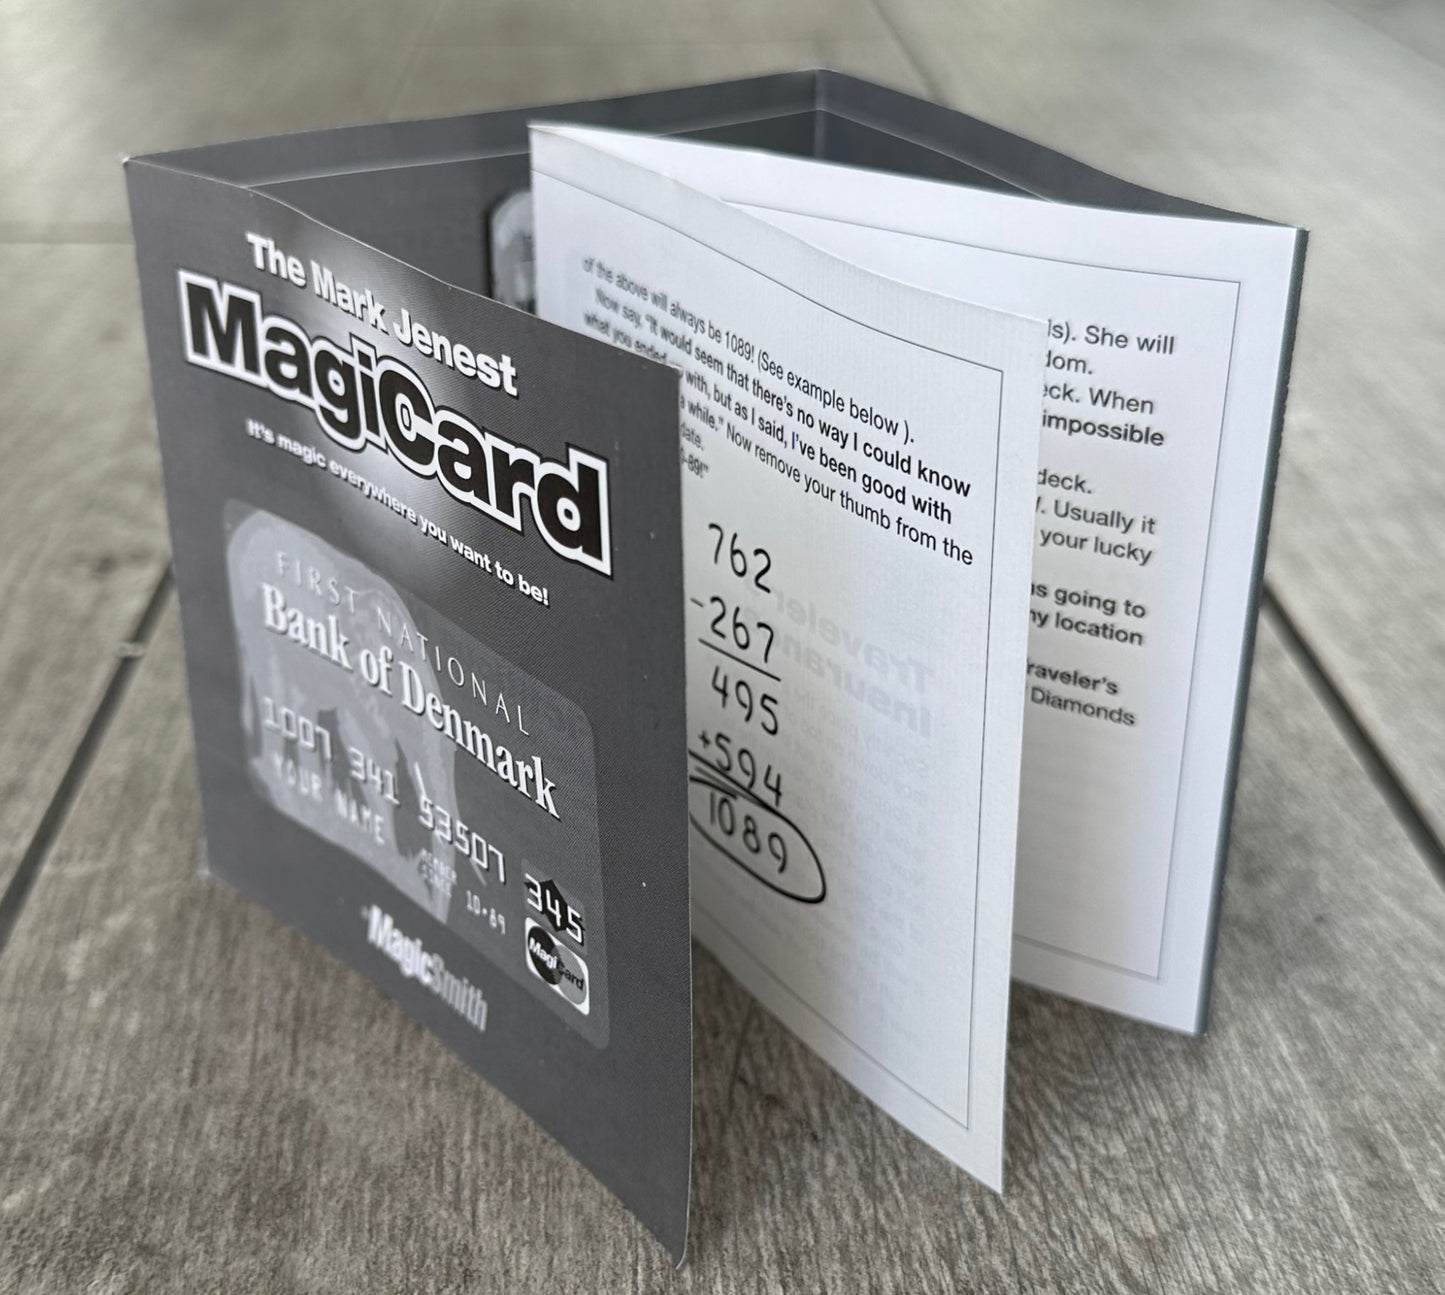 MagiCard by Mark Jenest